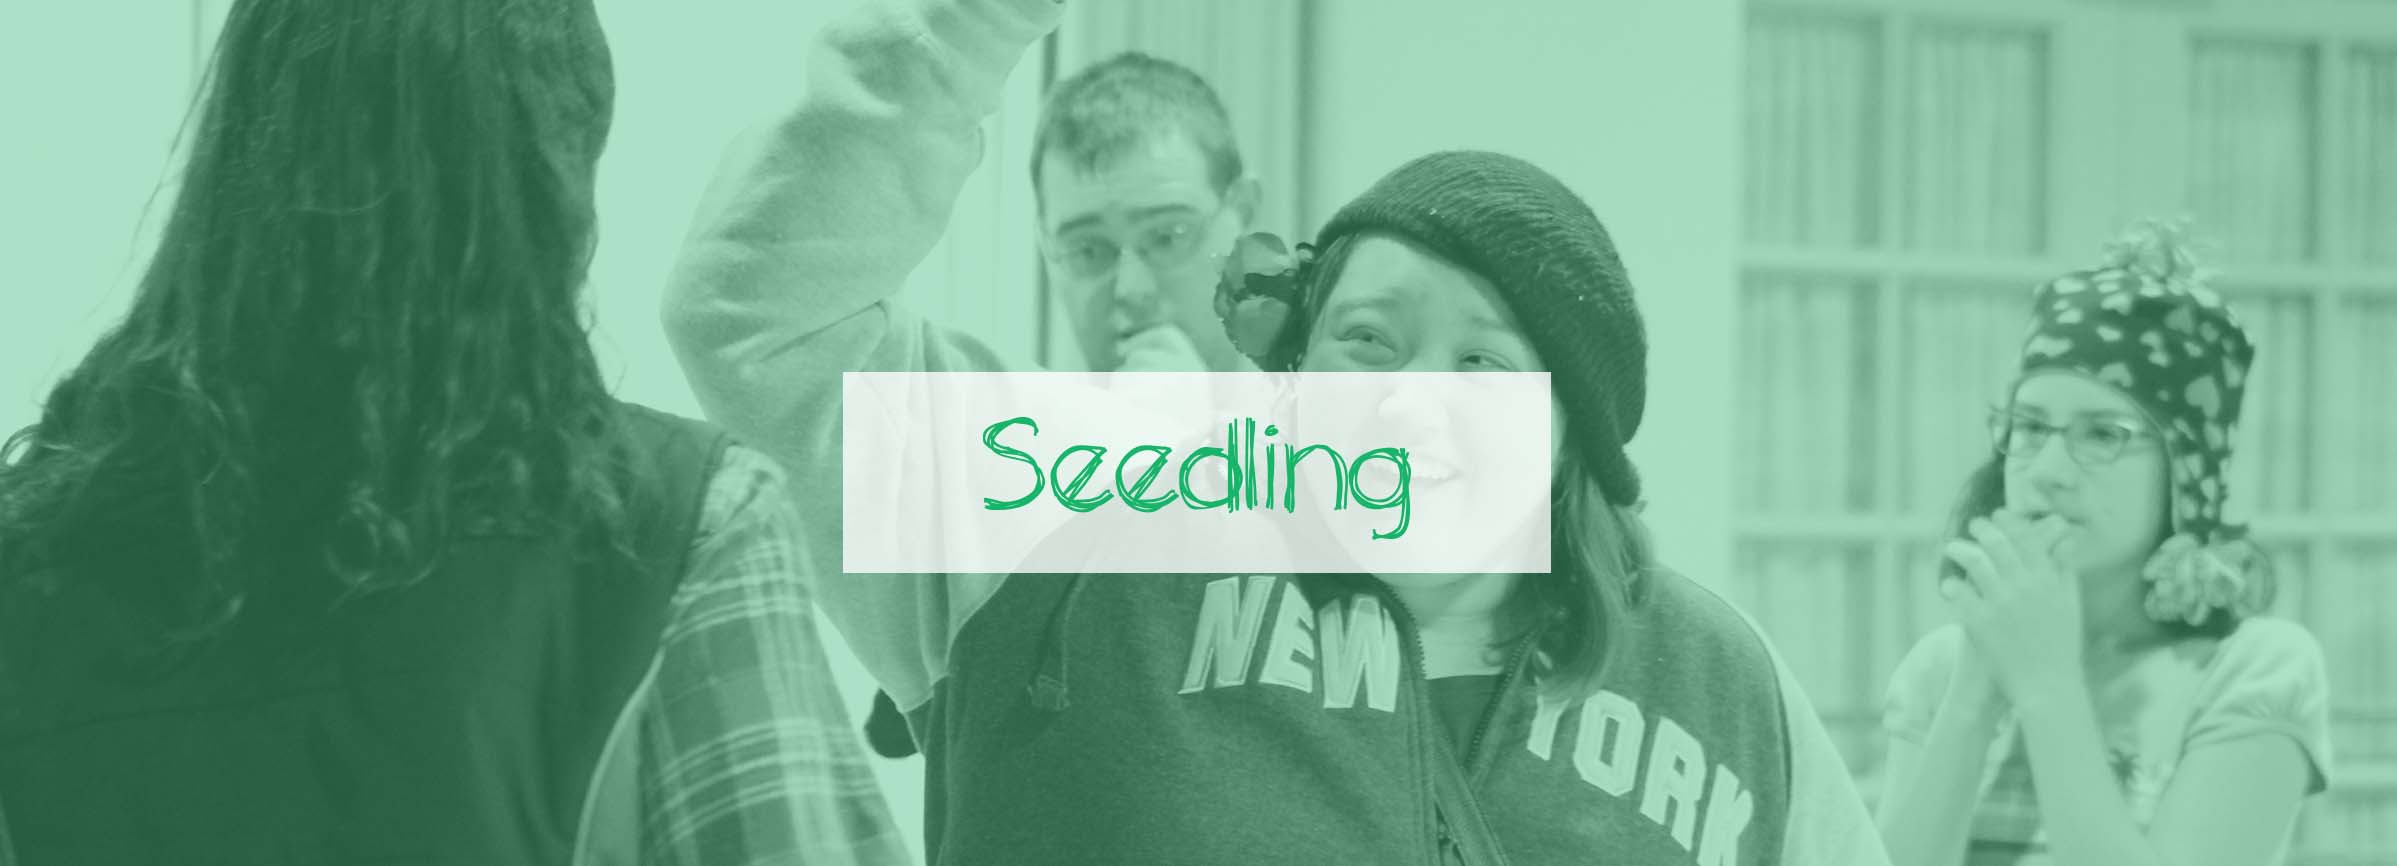 hero-seedling